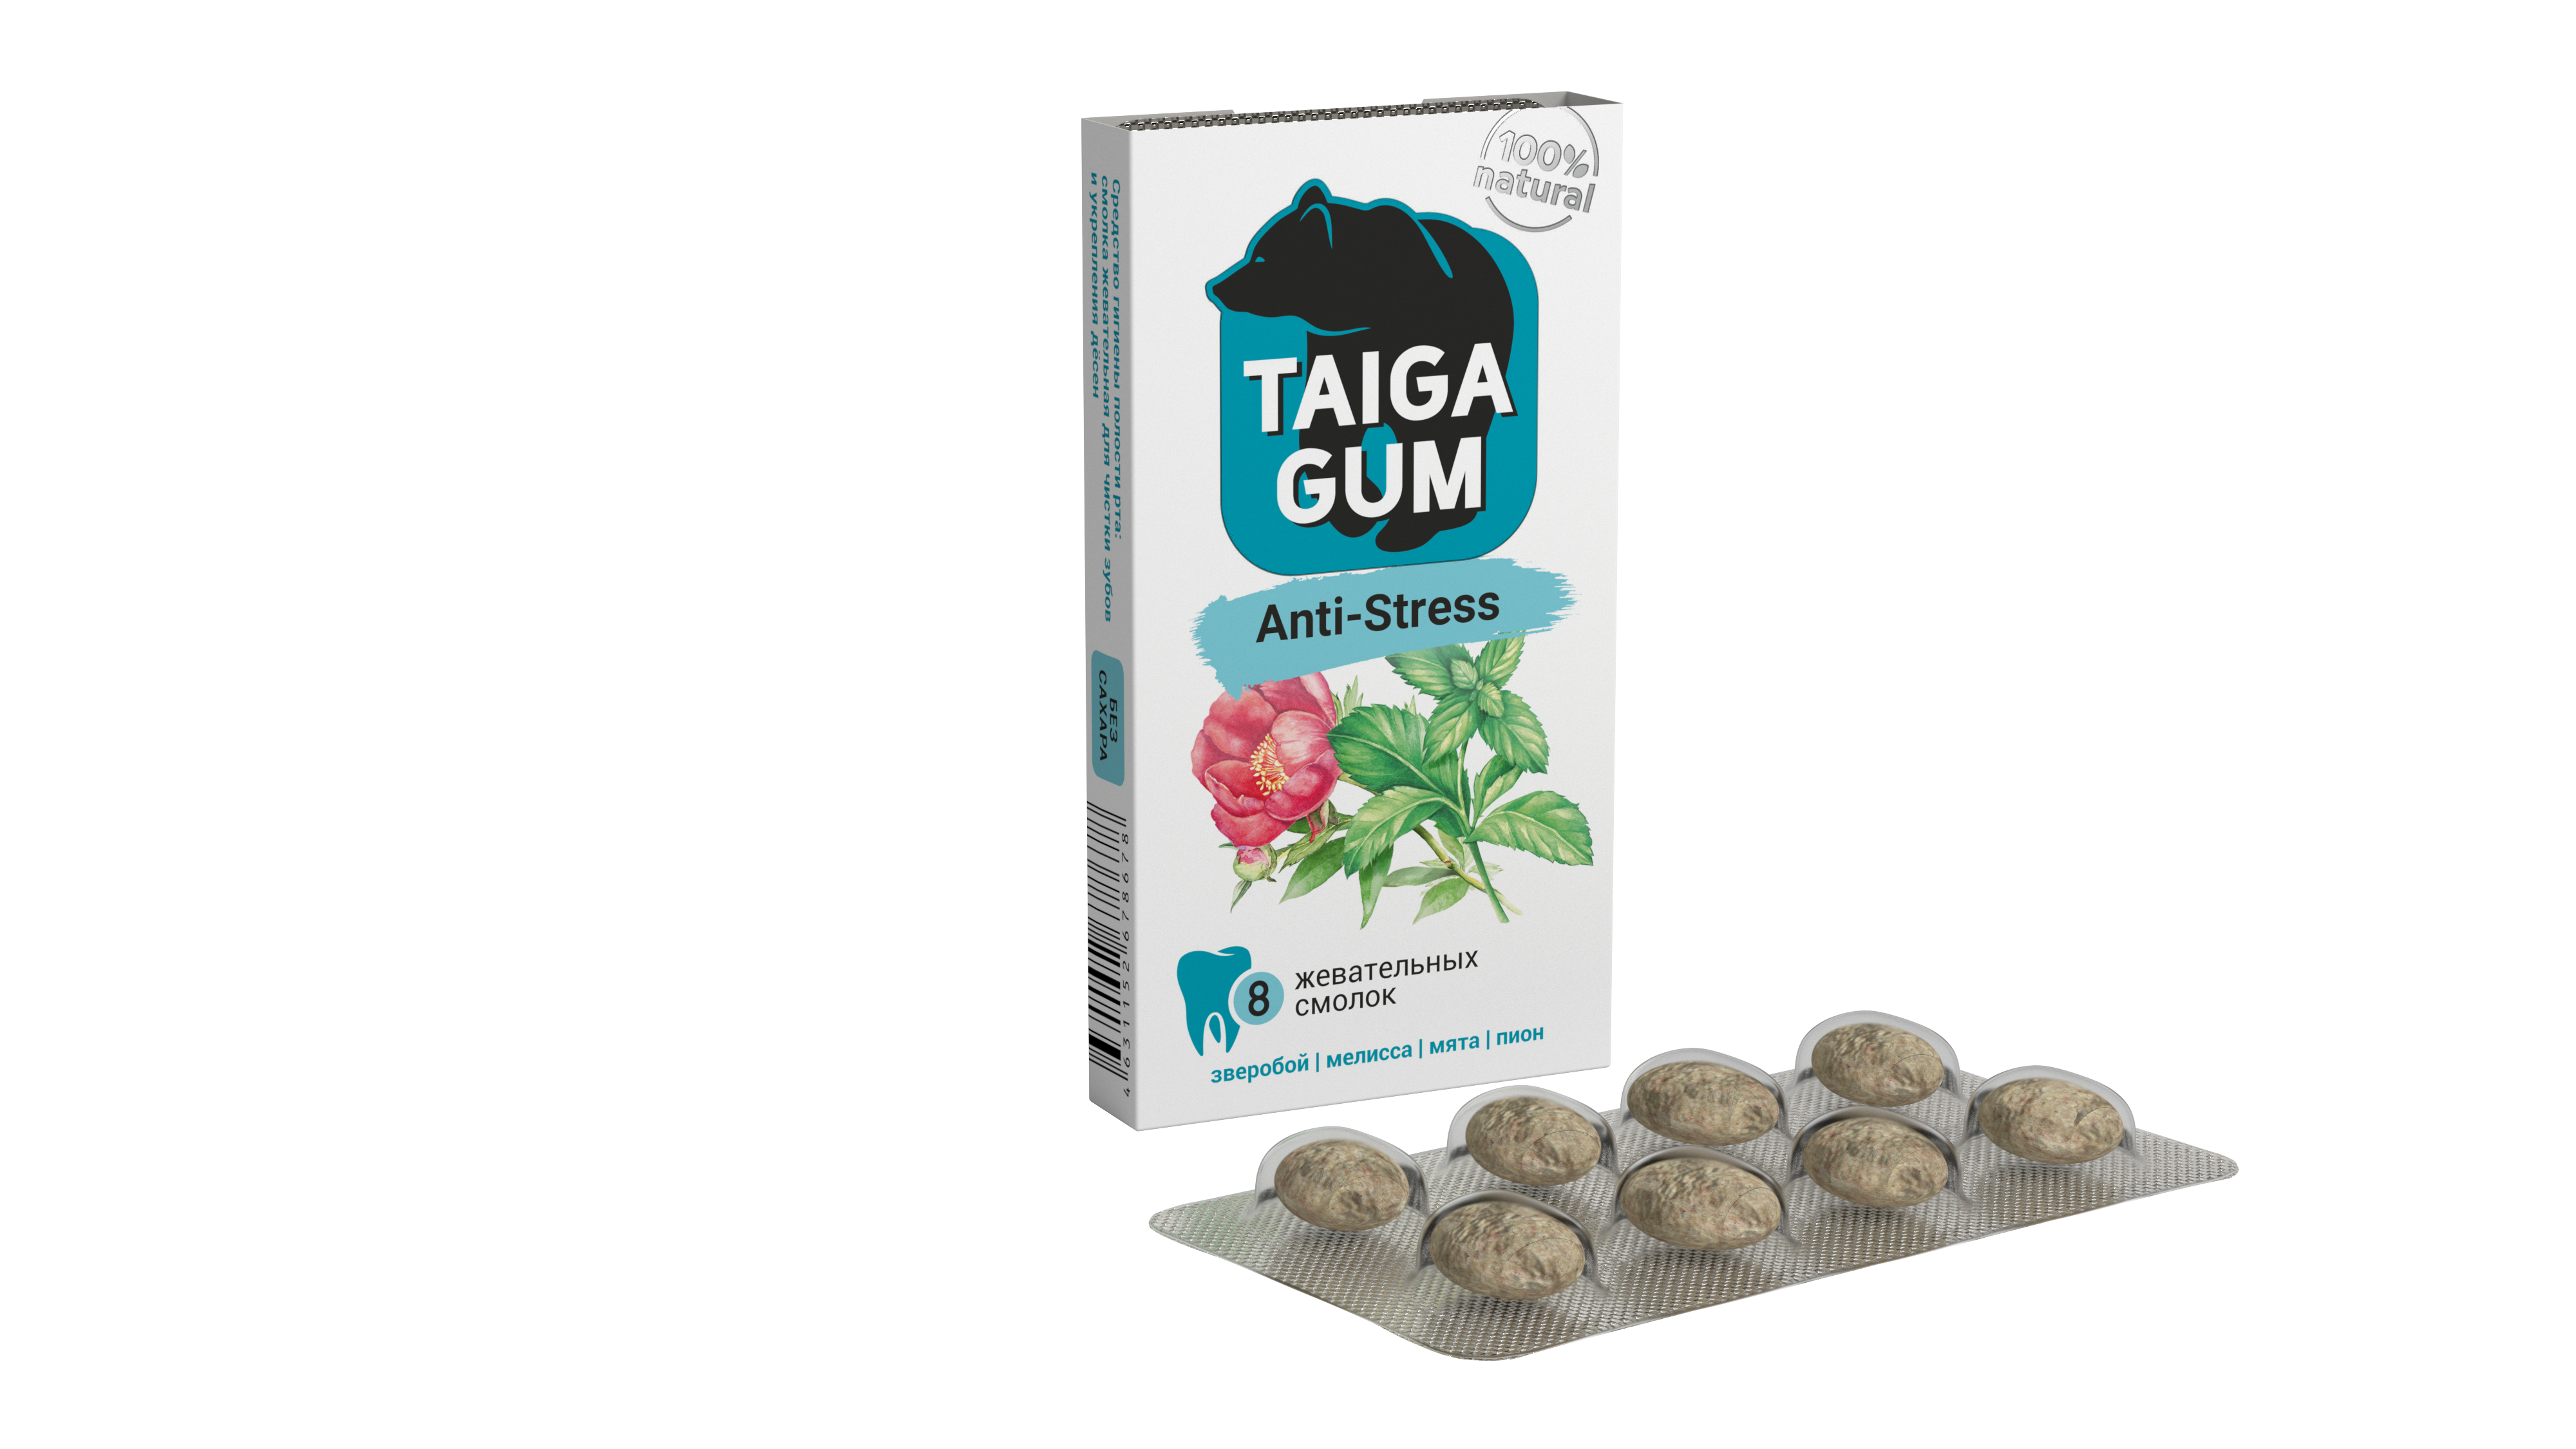 Taiga gum смолка жевательная с пчелиным воском anti-stress зверобой/мелисса/мята/пион драже без сахара N 8